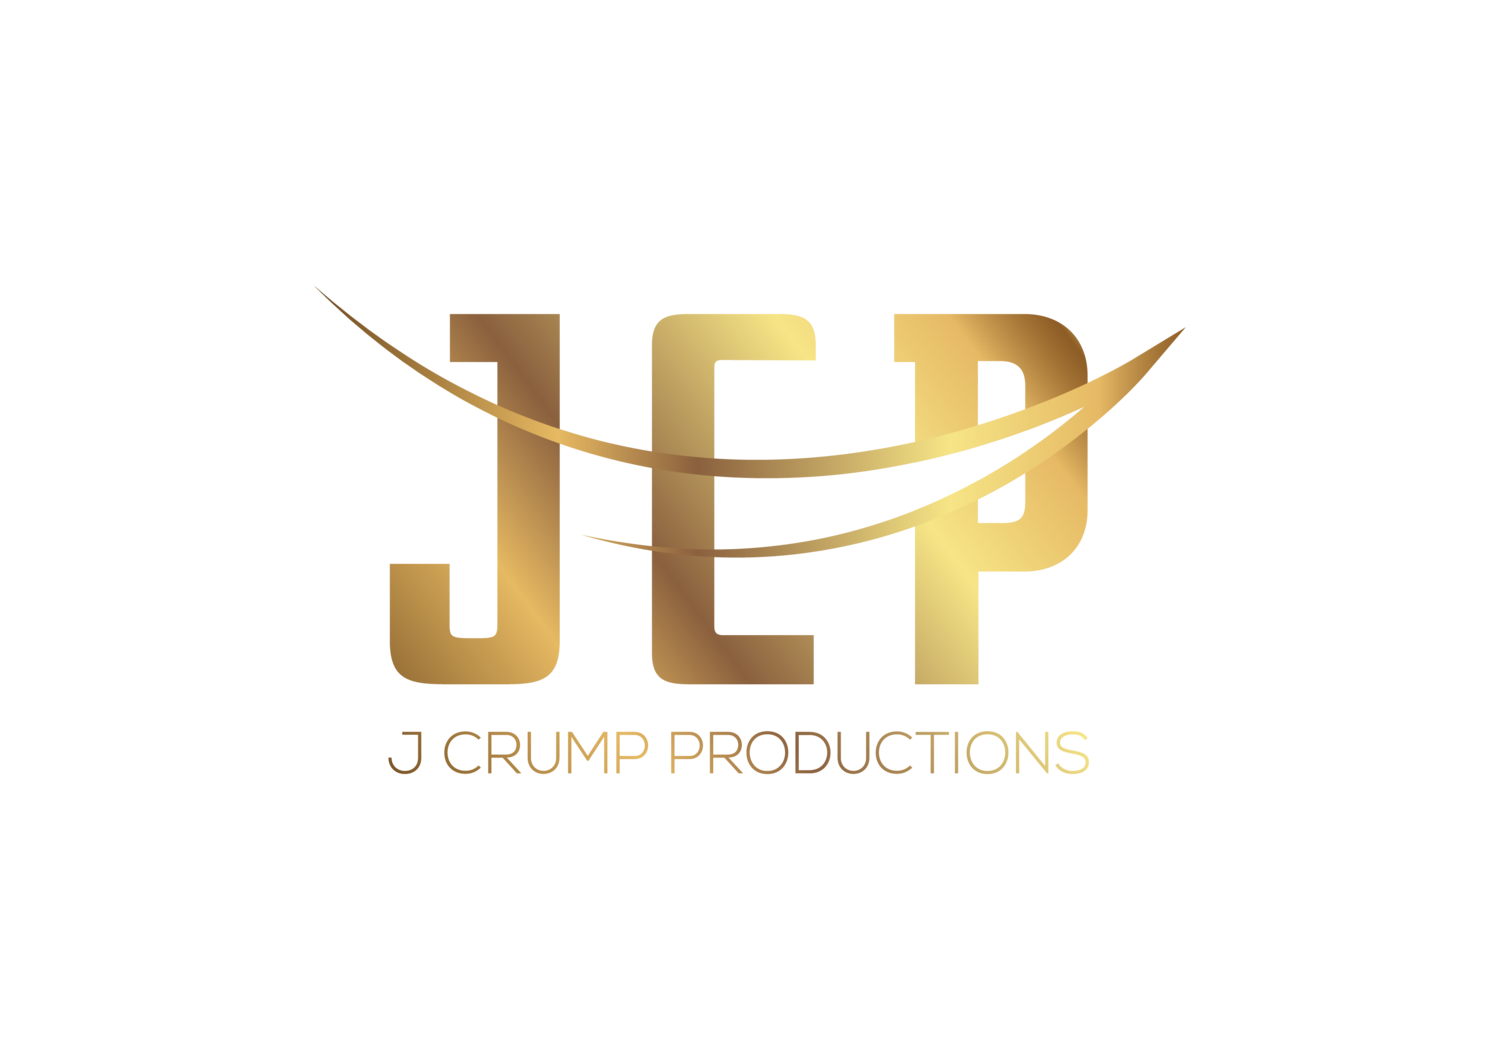 J Crump Productions